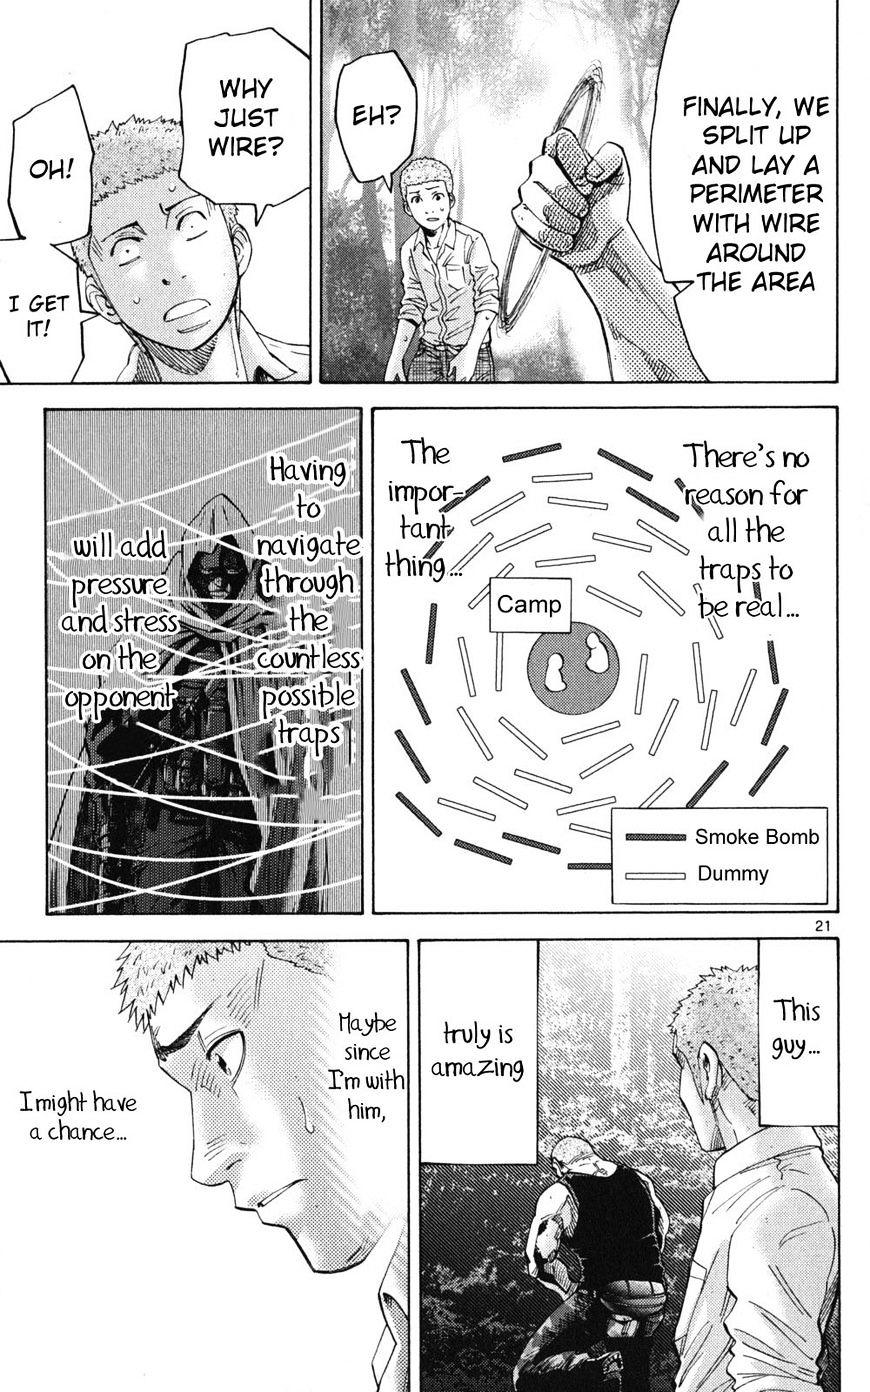 Imawa No Kuni No Alice Chapter 49.2 : Side Story 5 - King Of Spades (2) page 21 - Mangakakalot